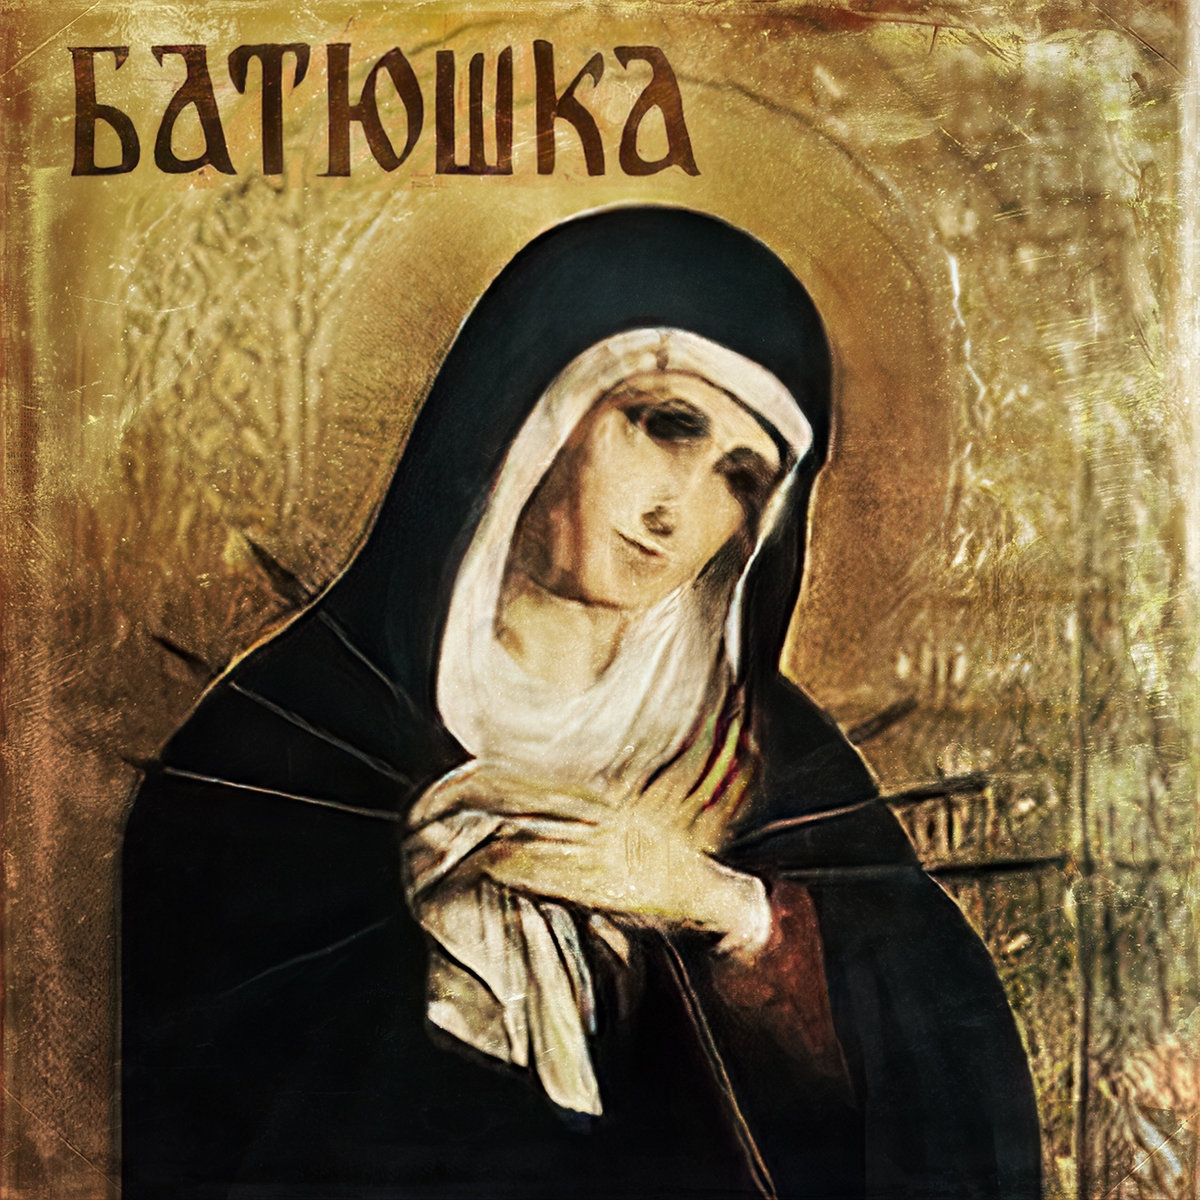 batyshka